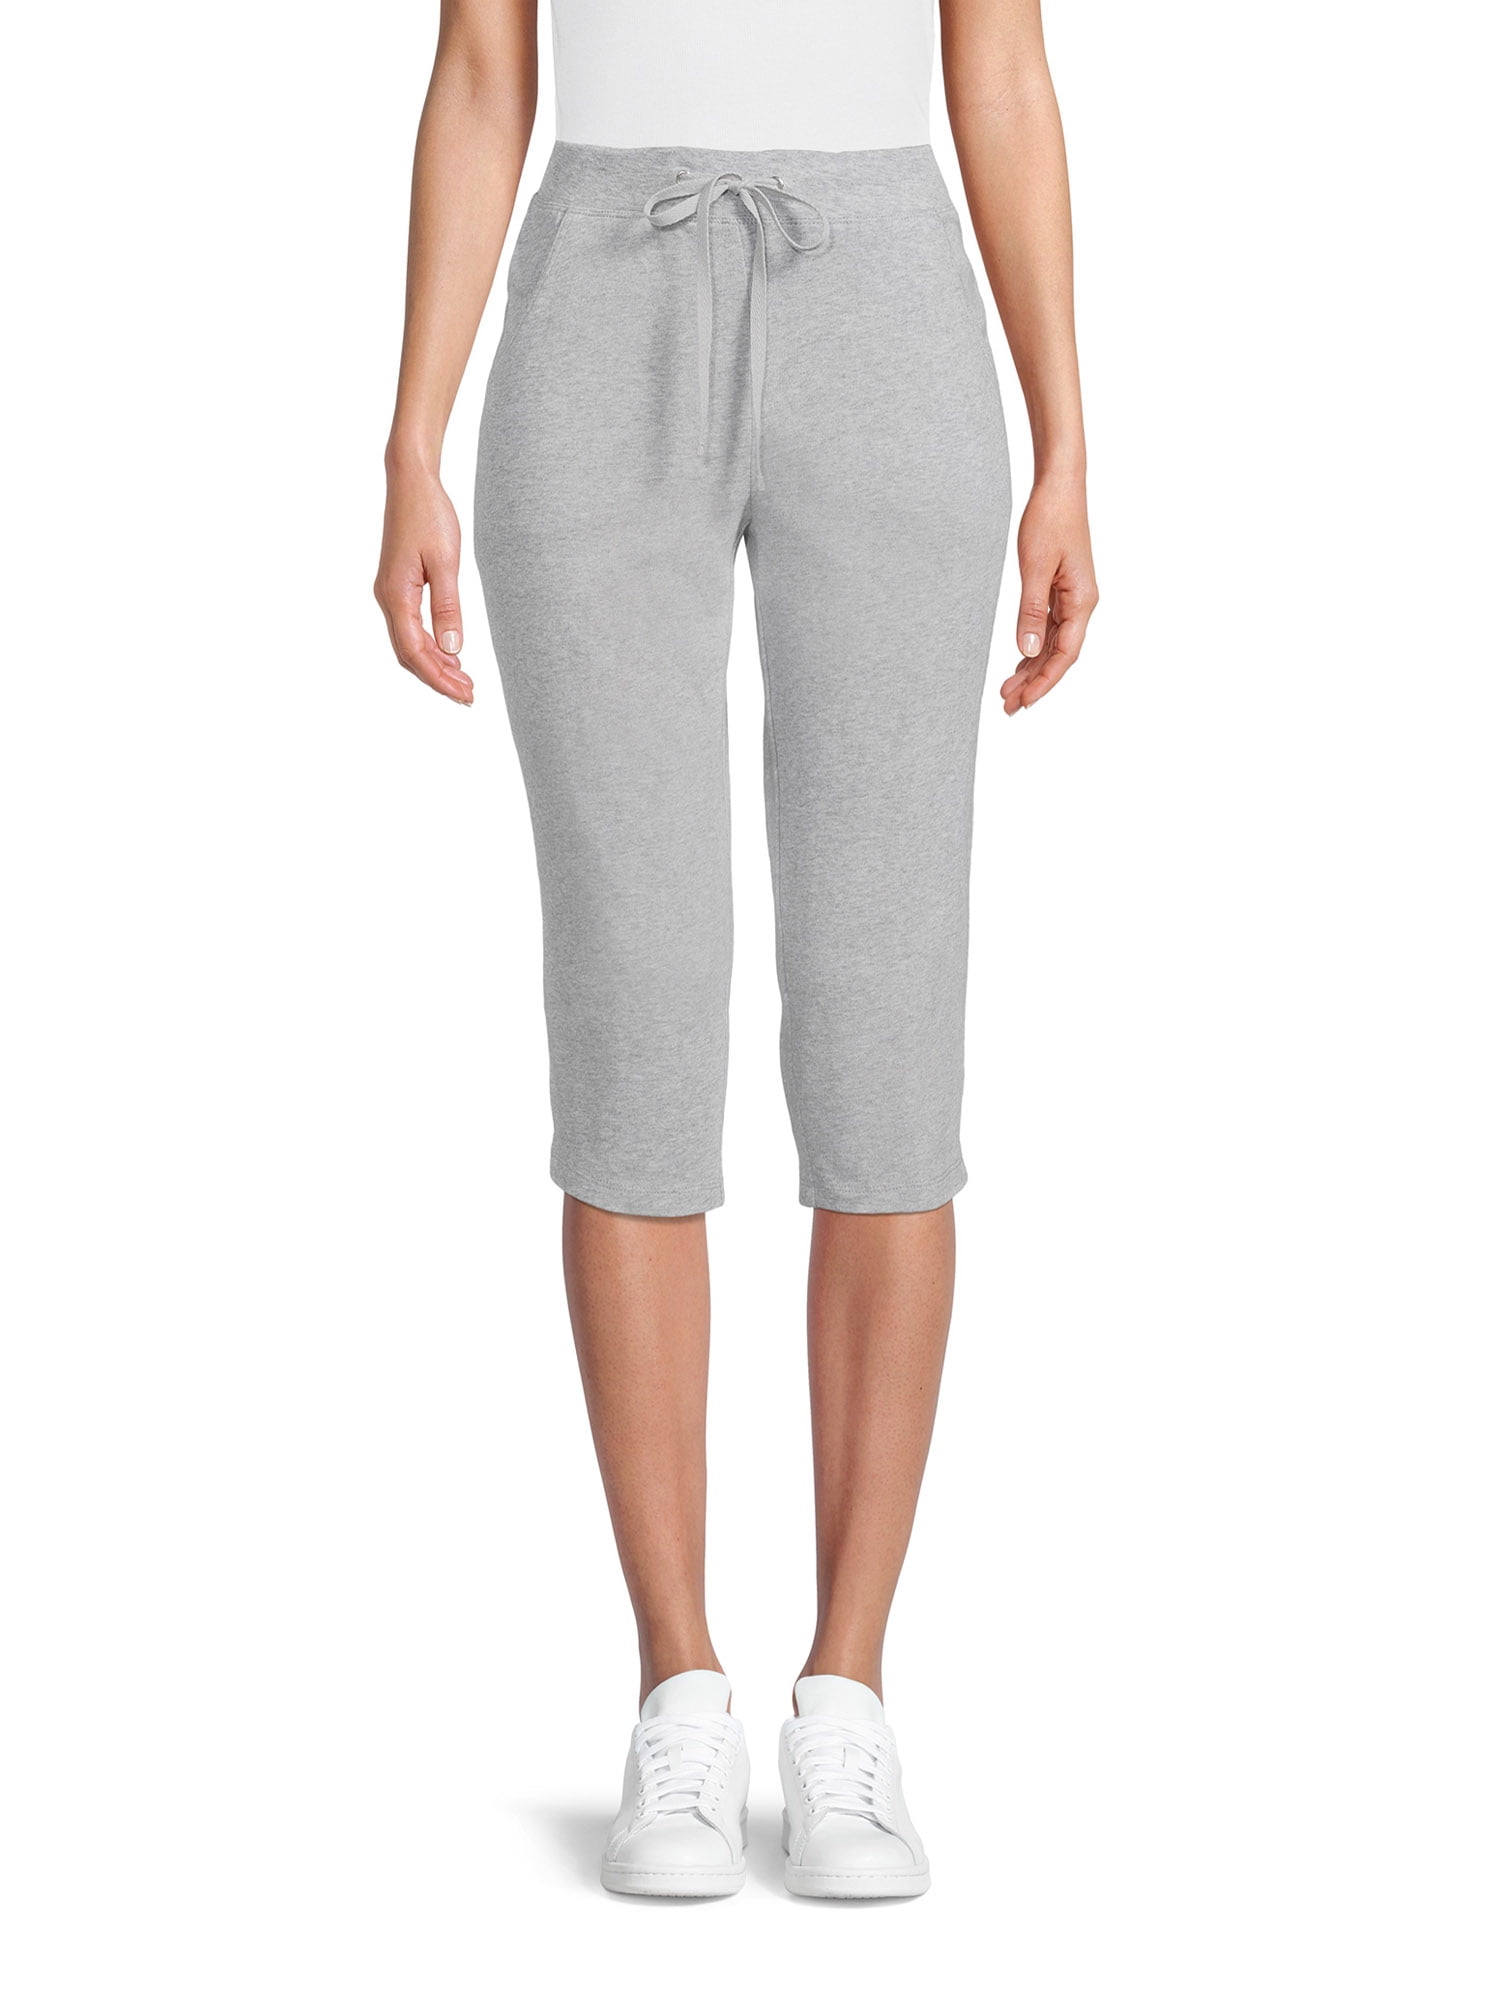 Buy the Womens Gray Heather Elastic Waist Stretch Pull-On Capri Leggings  Size XS